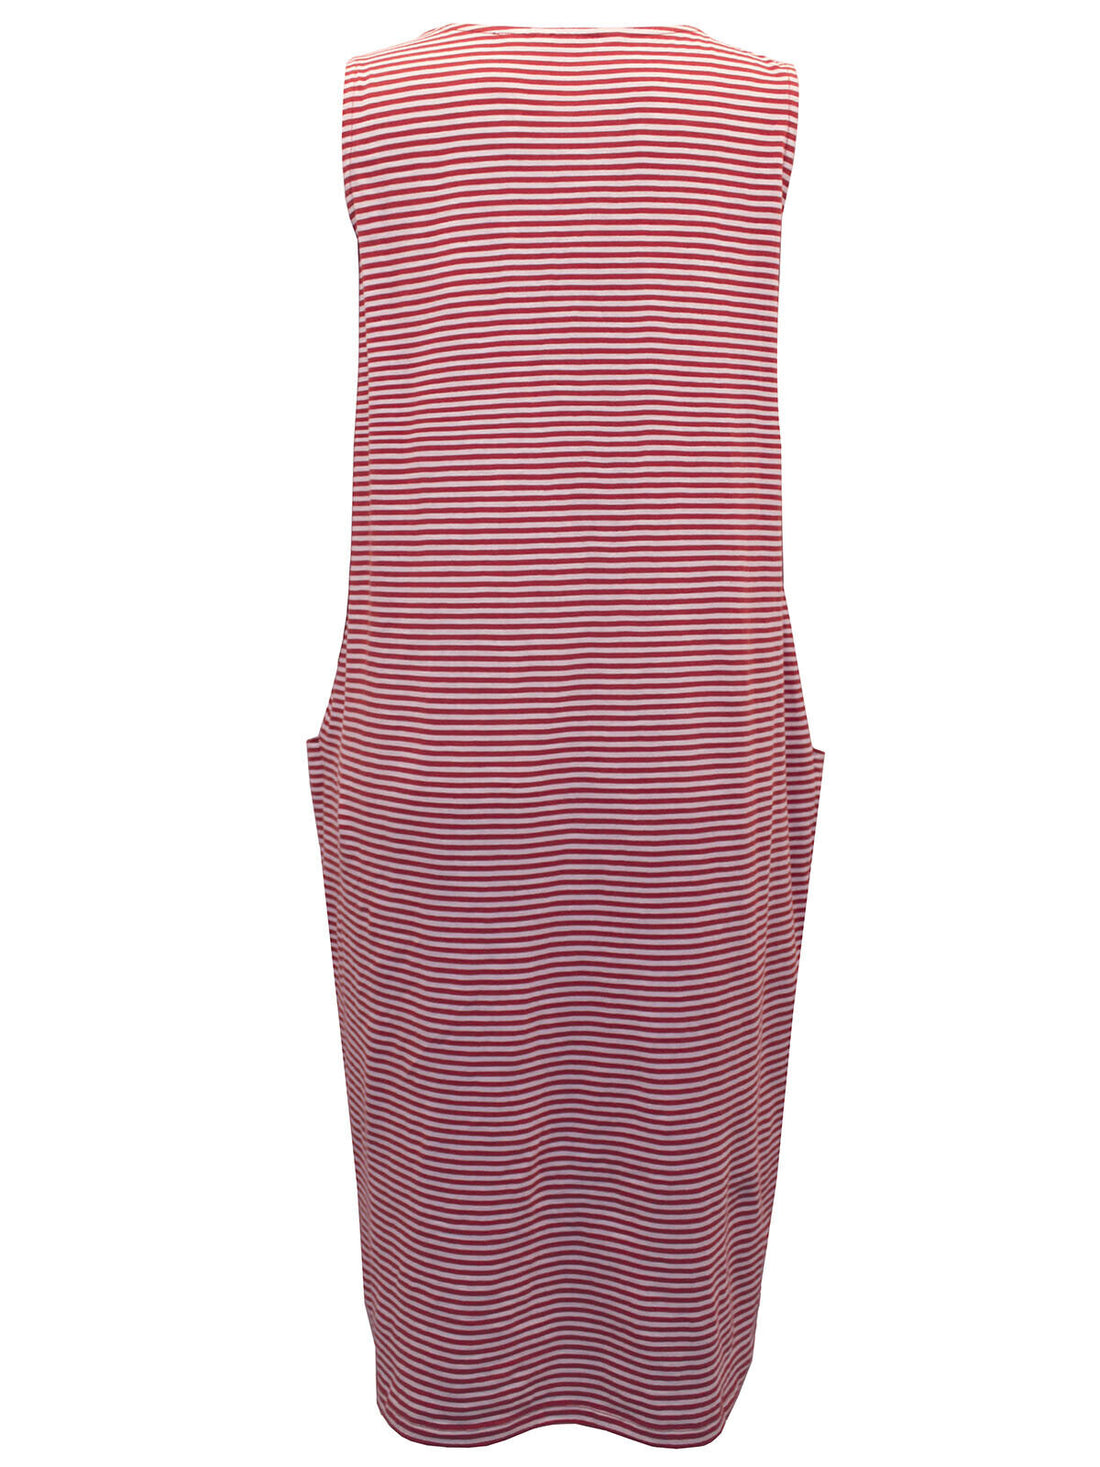 EX Seasalt Red Stripe Canvas Sunbaked Chalk Halldrine Dress 10-28 RRP £59.95